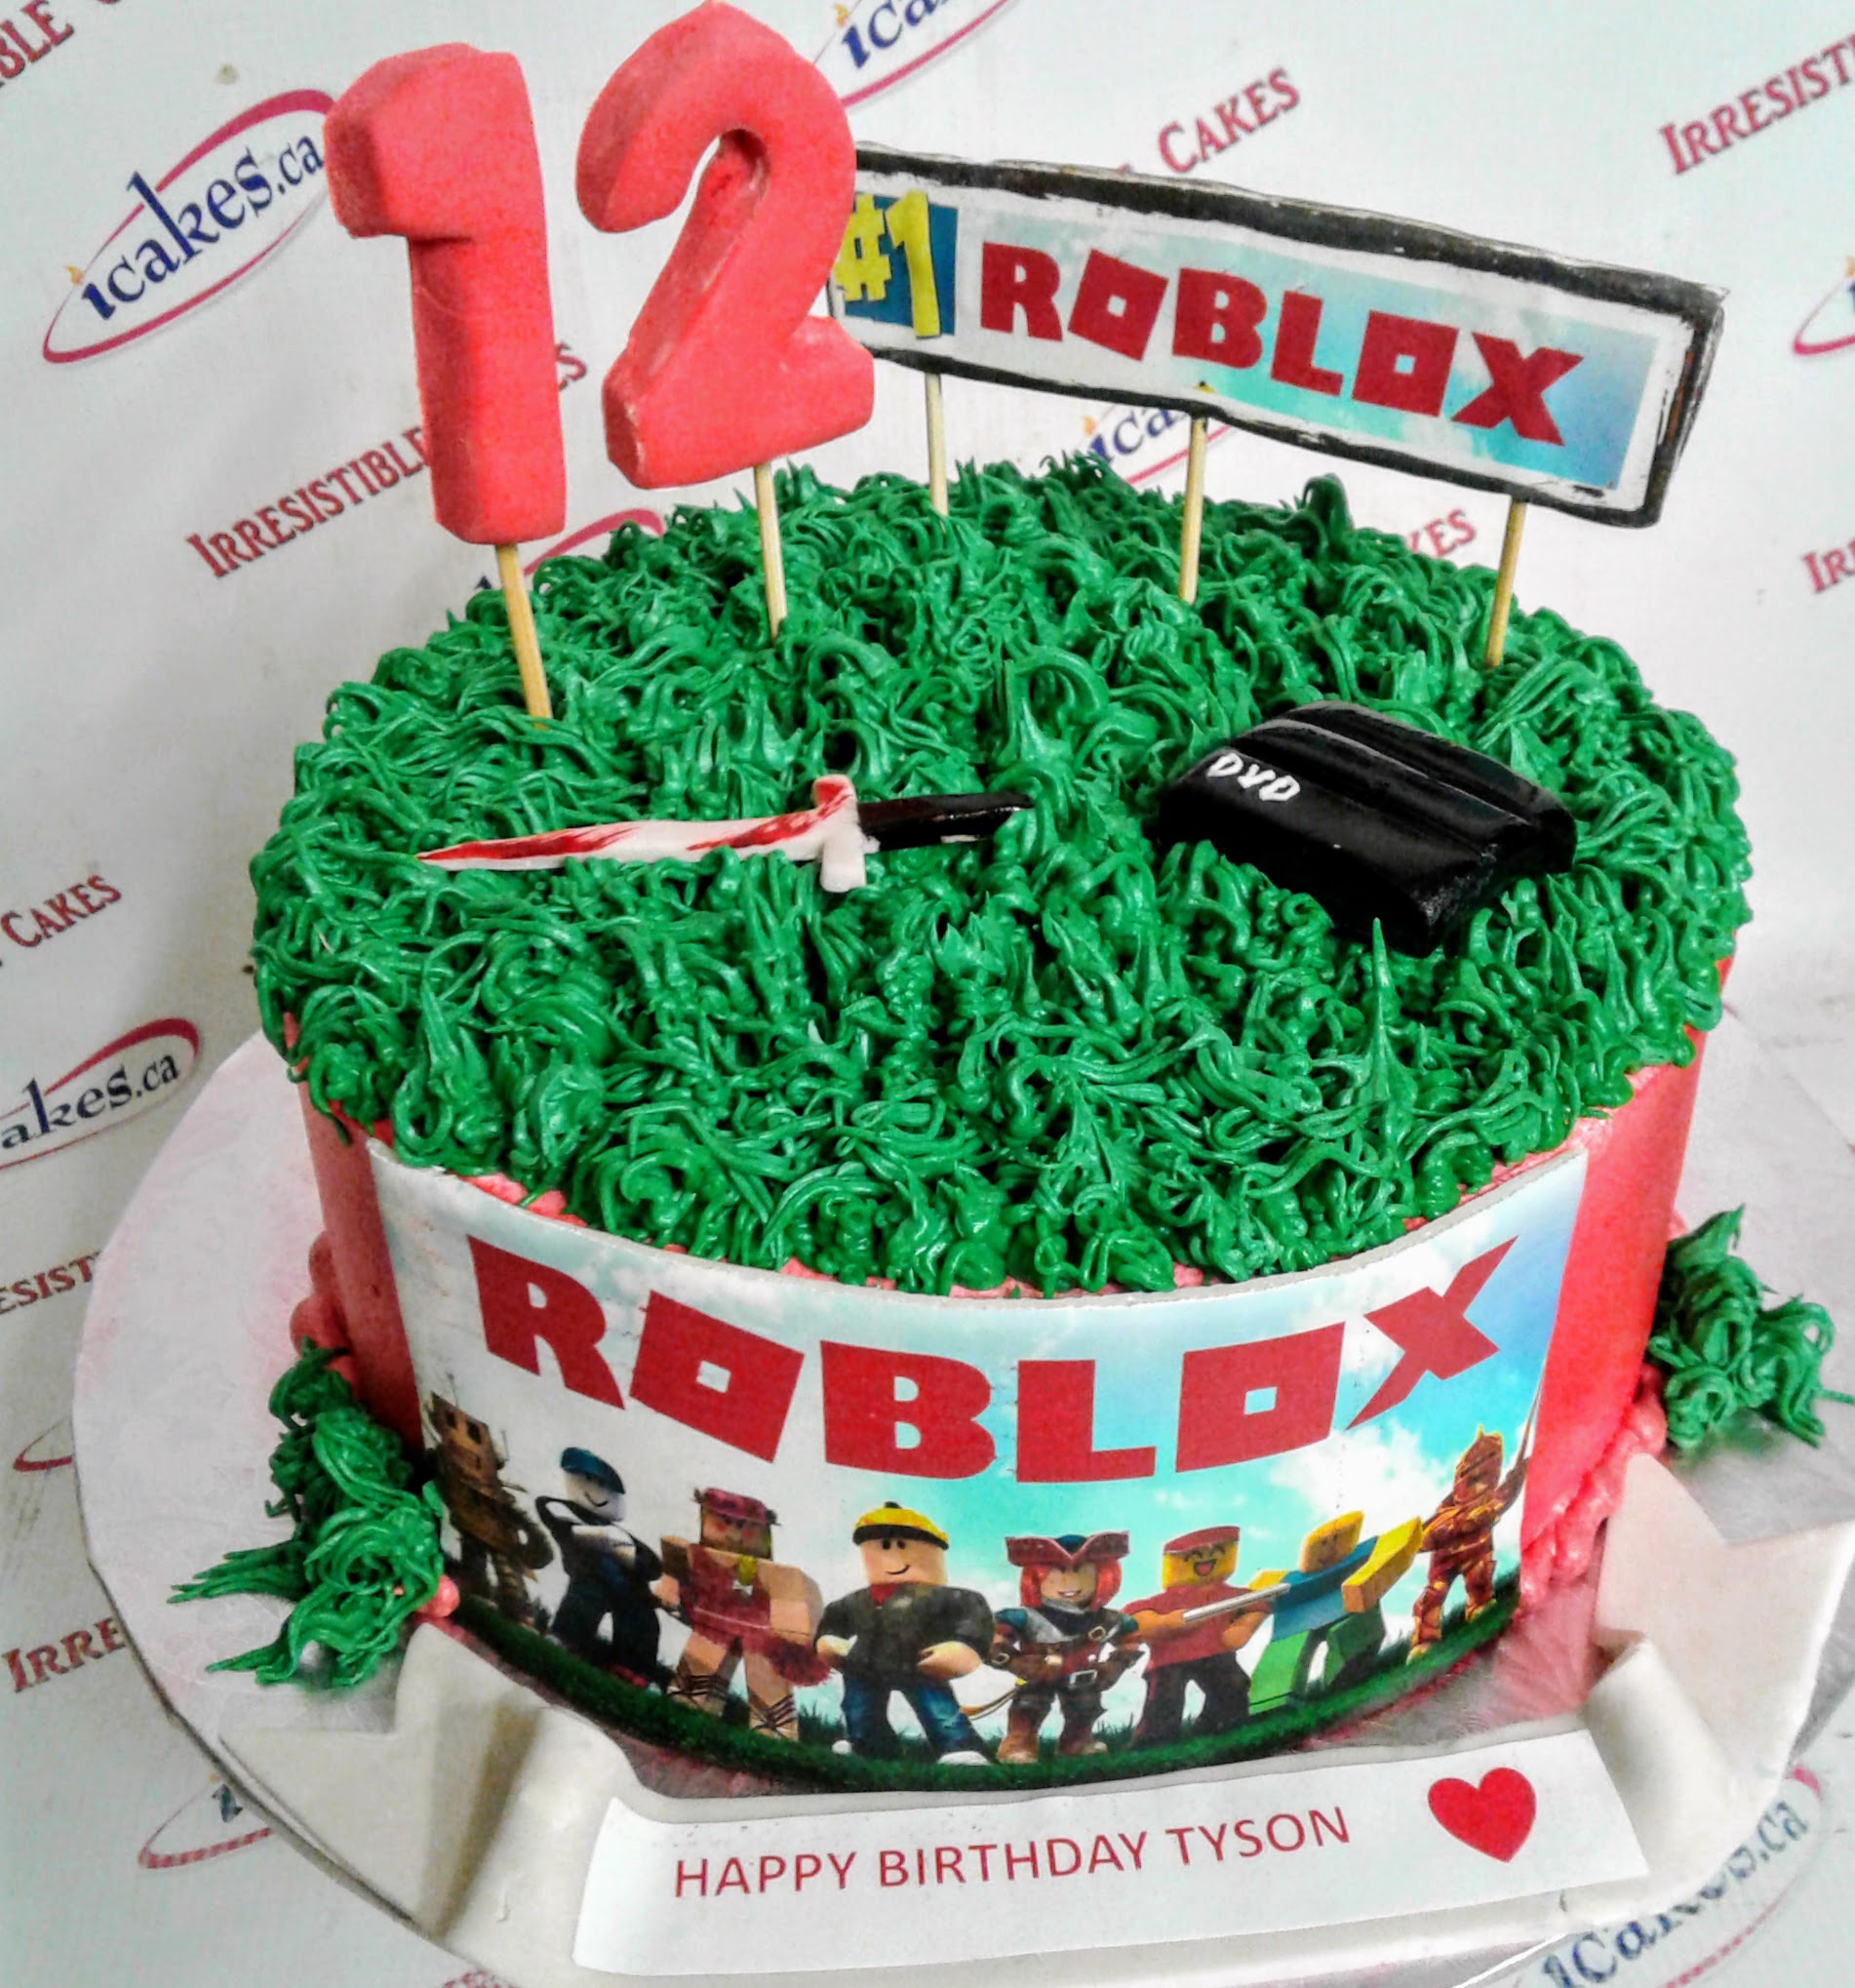 Children's Birthday Celebration Cakes - Quality Cake Company